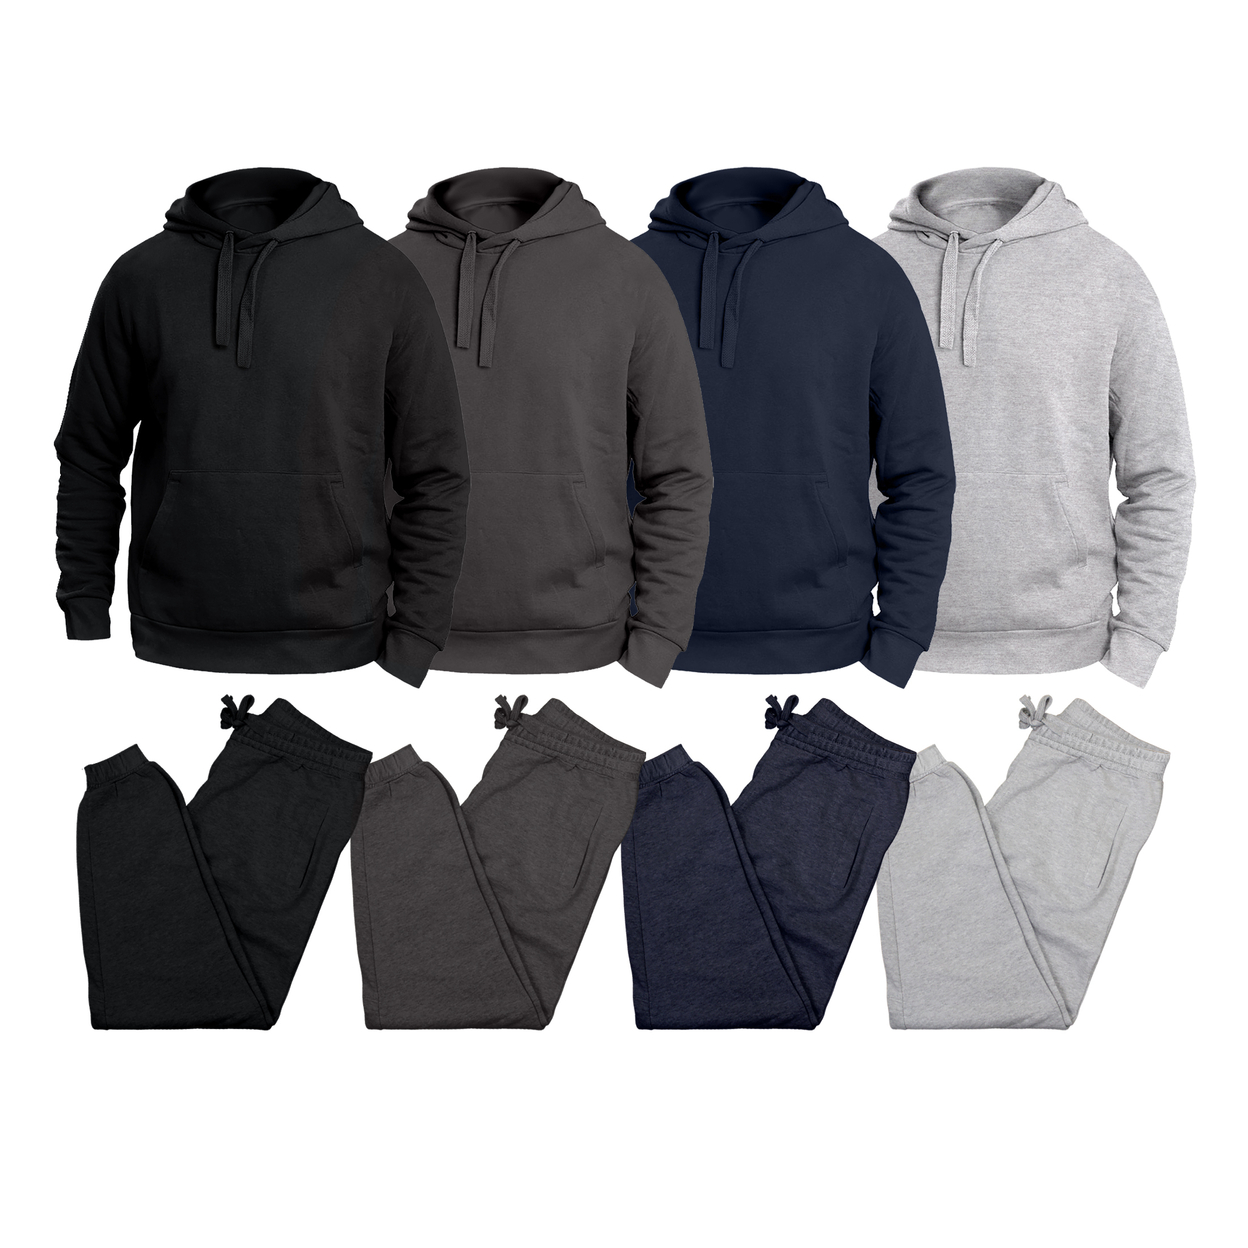 Multi-Pack: Big & Tall Men's Winter Warm Cozy Athletic Fleece Lined Multi-Pocket Cargo Sweatsuit - Black, 1-pack, Large